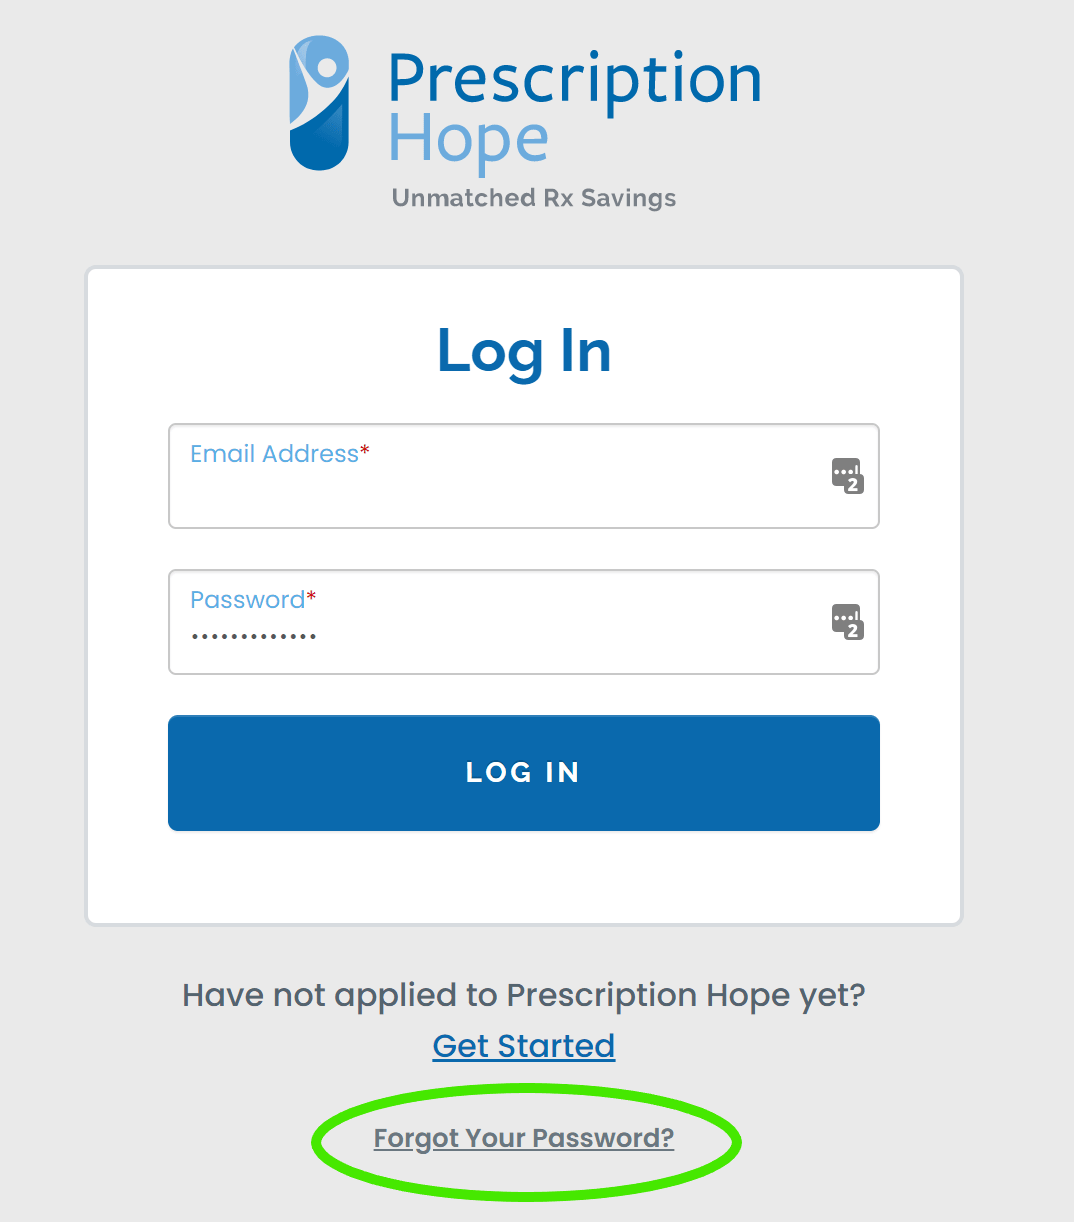 Forgot password to Prescription Hope